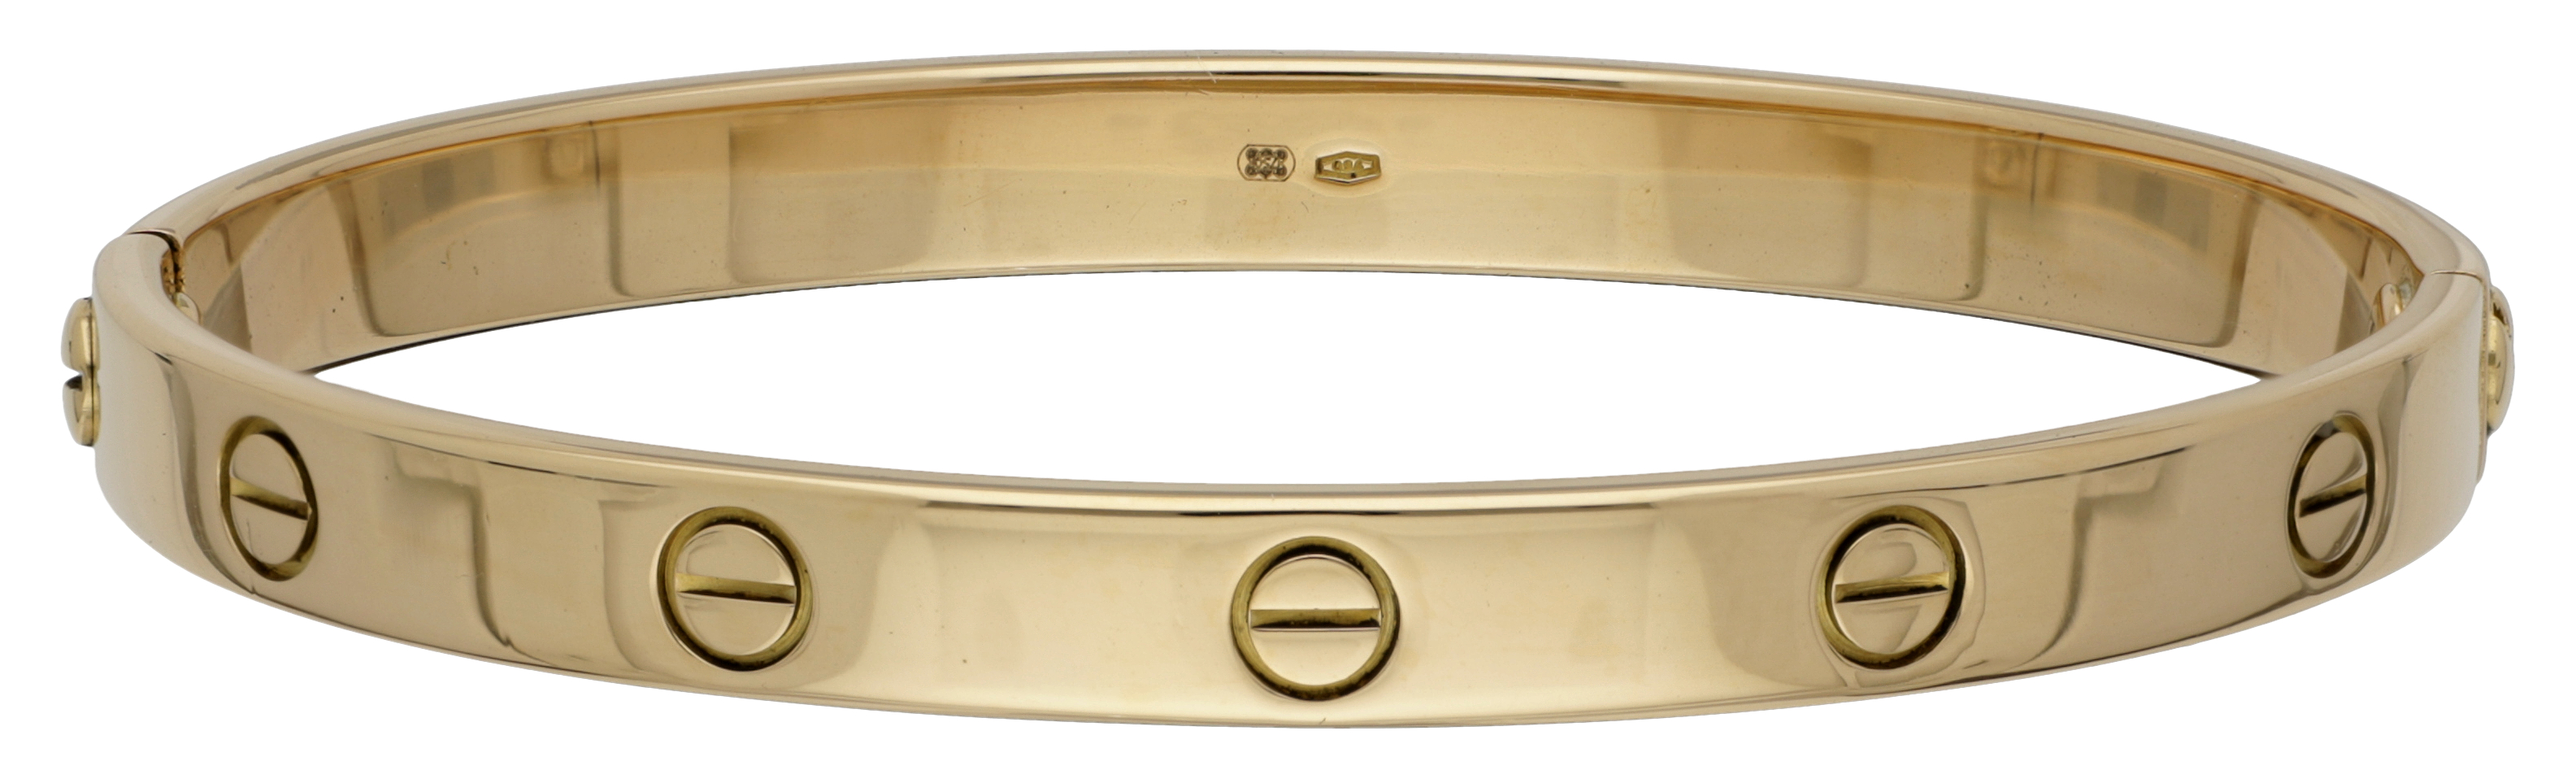 No Reserve - Cartier 18K yellow gold Love bracelet. - Image 2 of 4